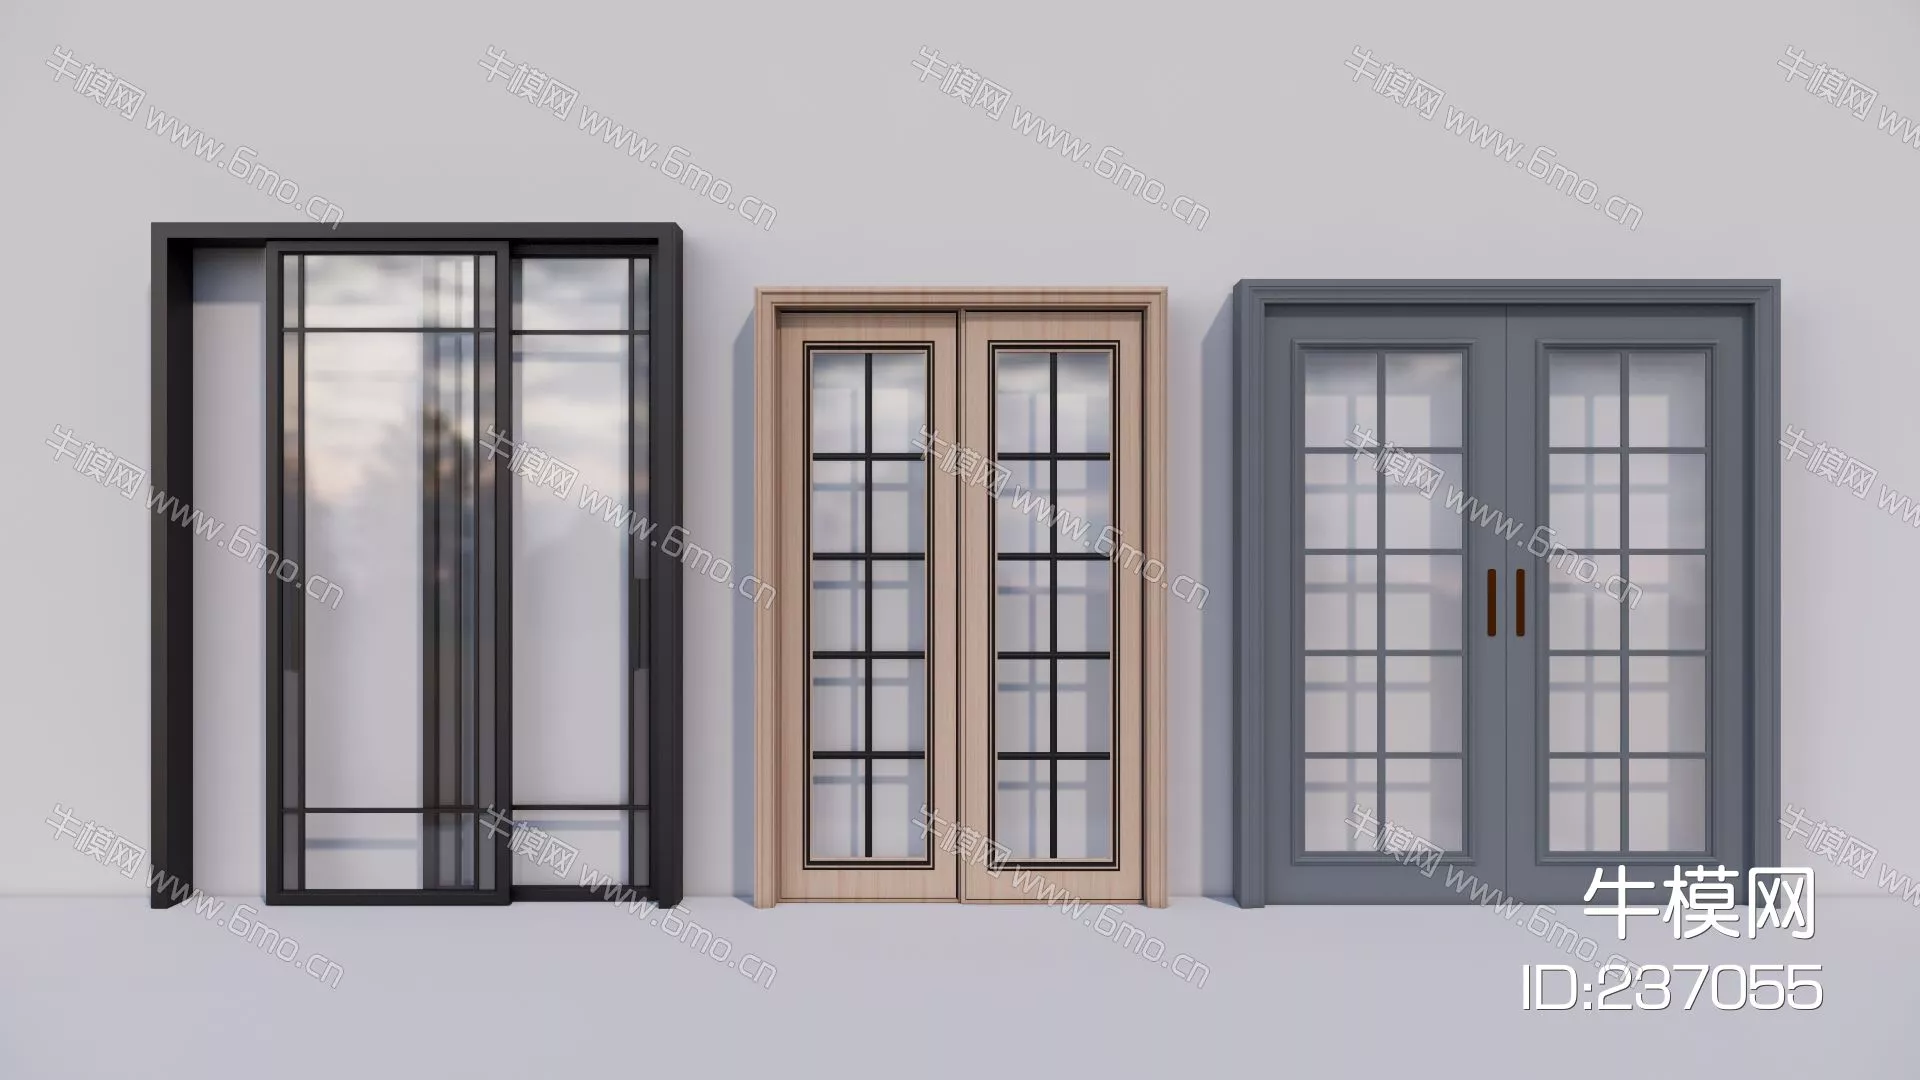 MODERN DOOR AND WINDOWS - SKETCHUP 3D MODEL - ENSCAPE - 237055